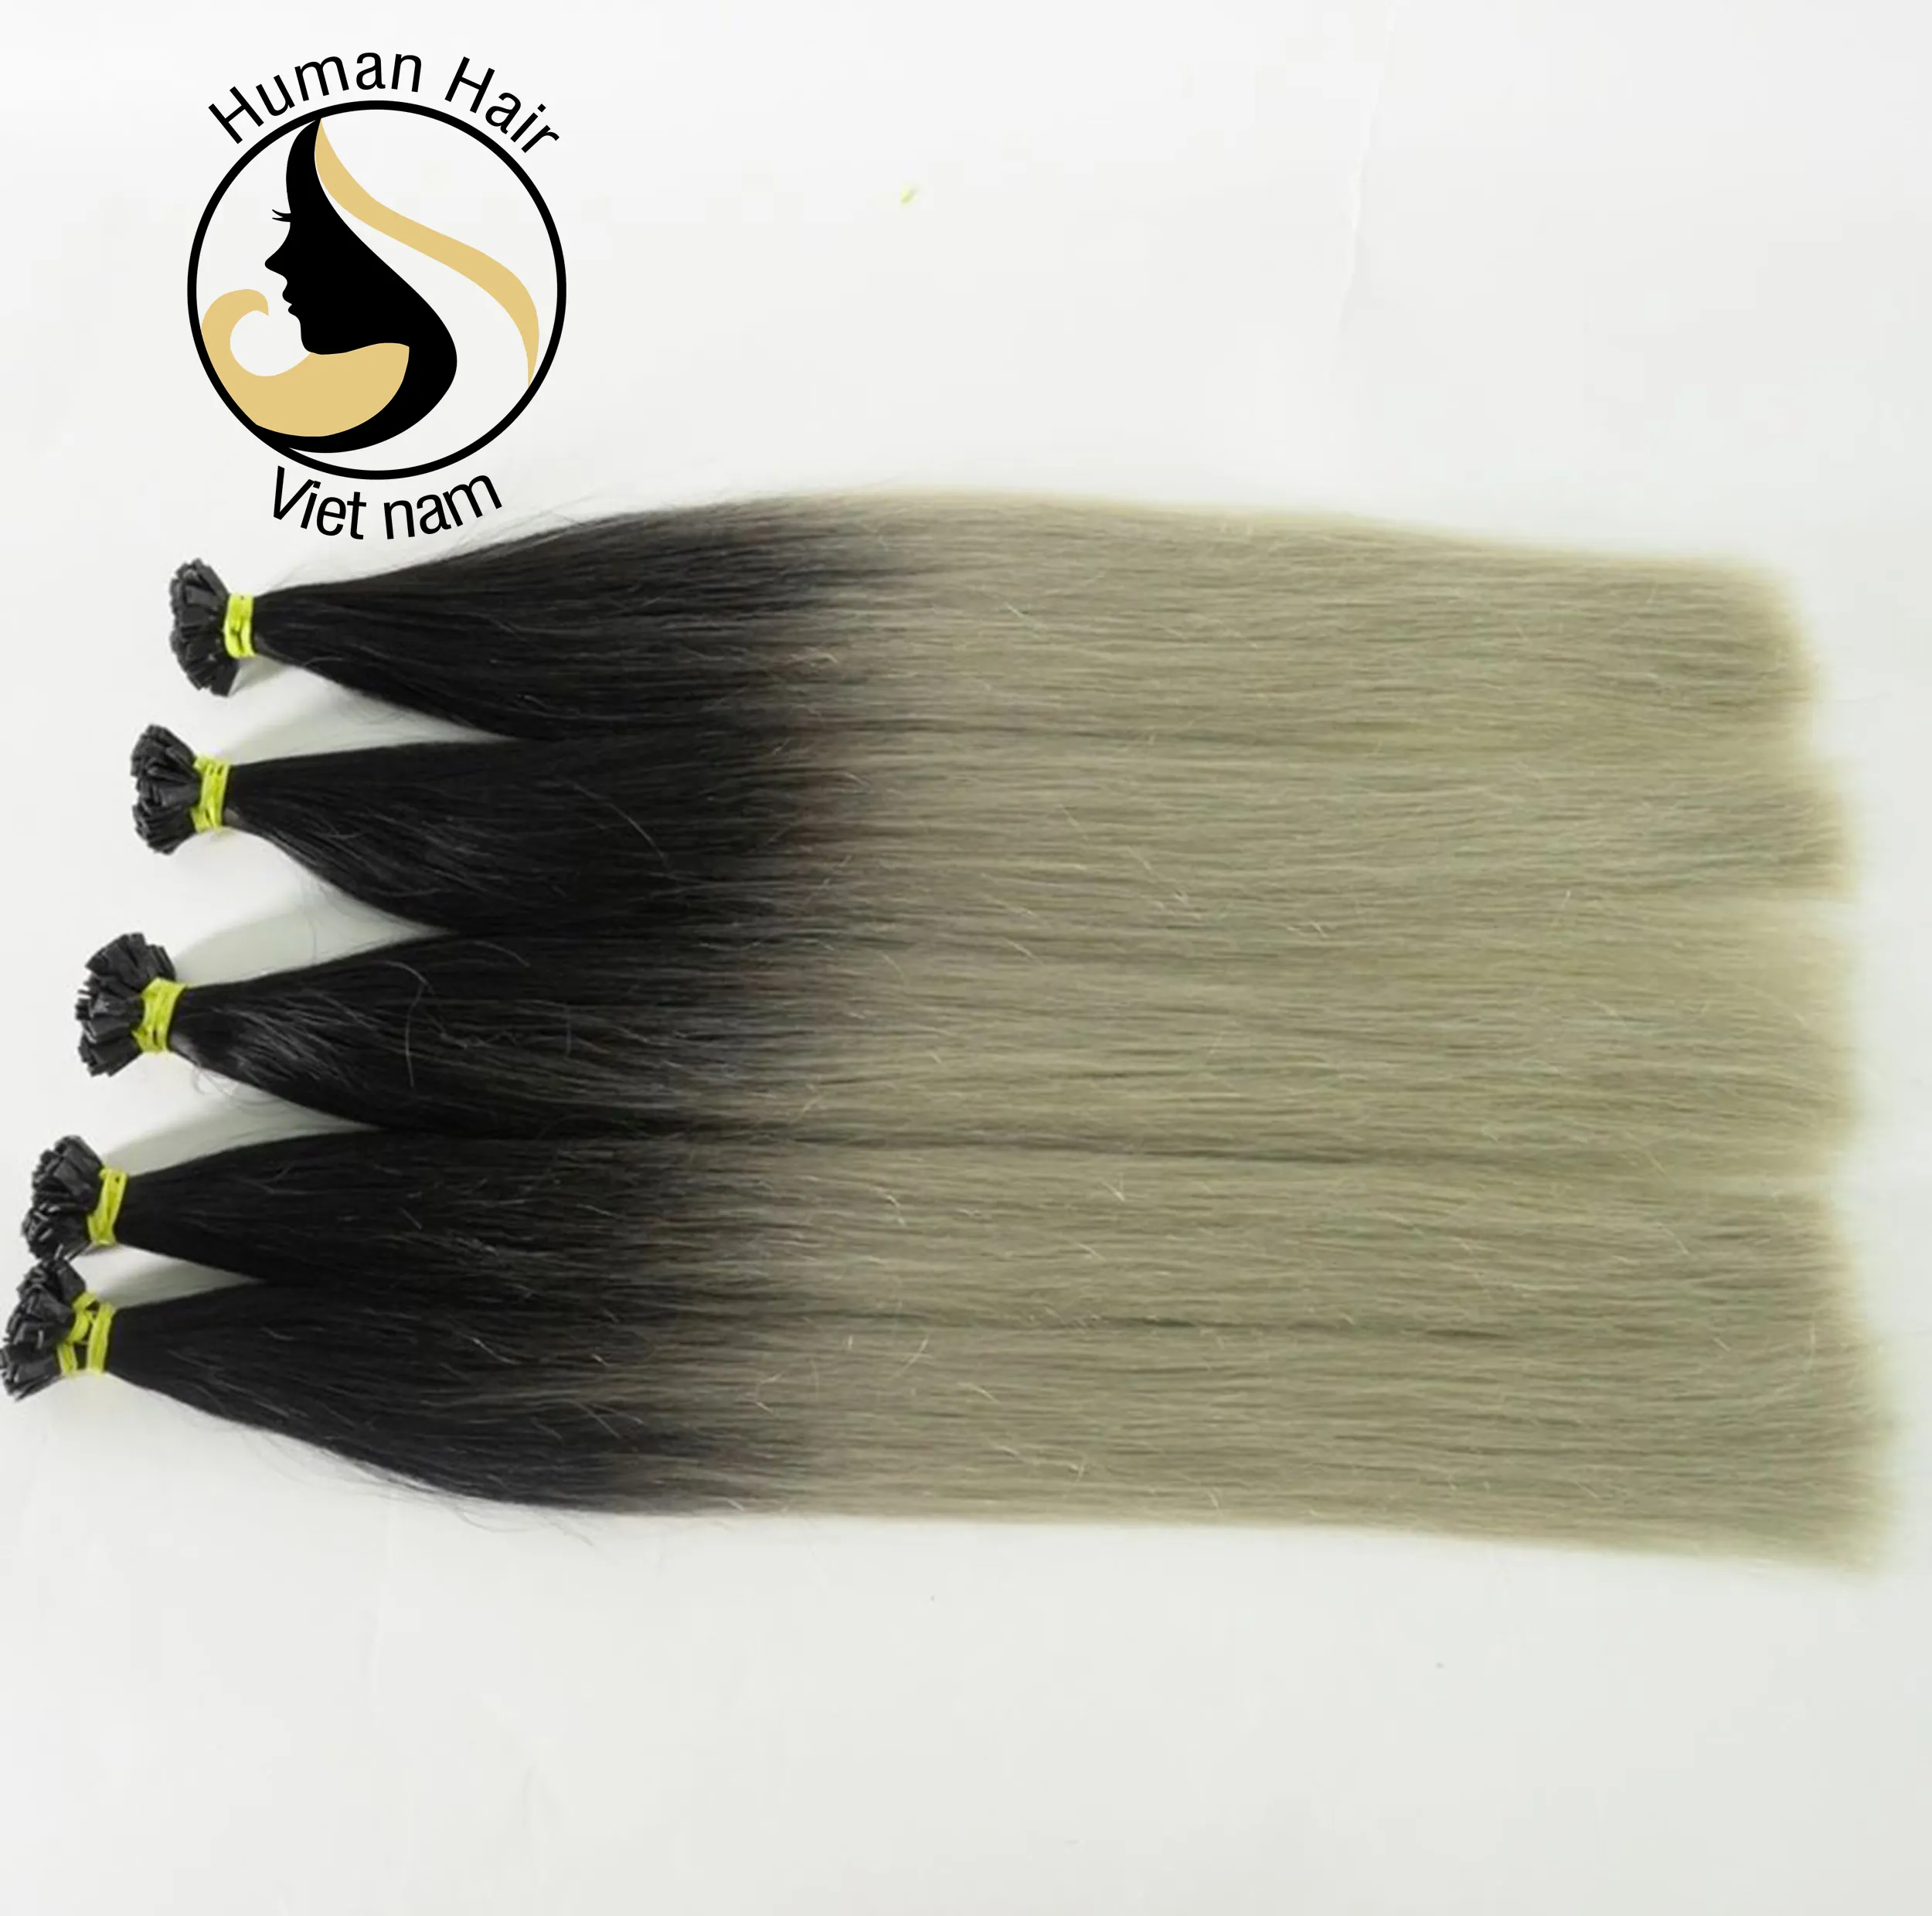 Human Hair Vietnam Factory Two Tone #1 black/ grey Ombre color double Flat tip hair extension 1gram/ 1 piece